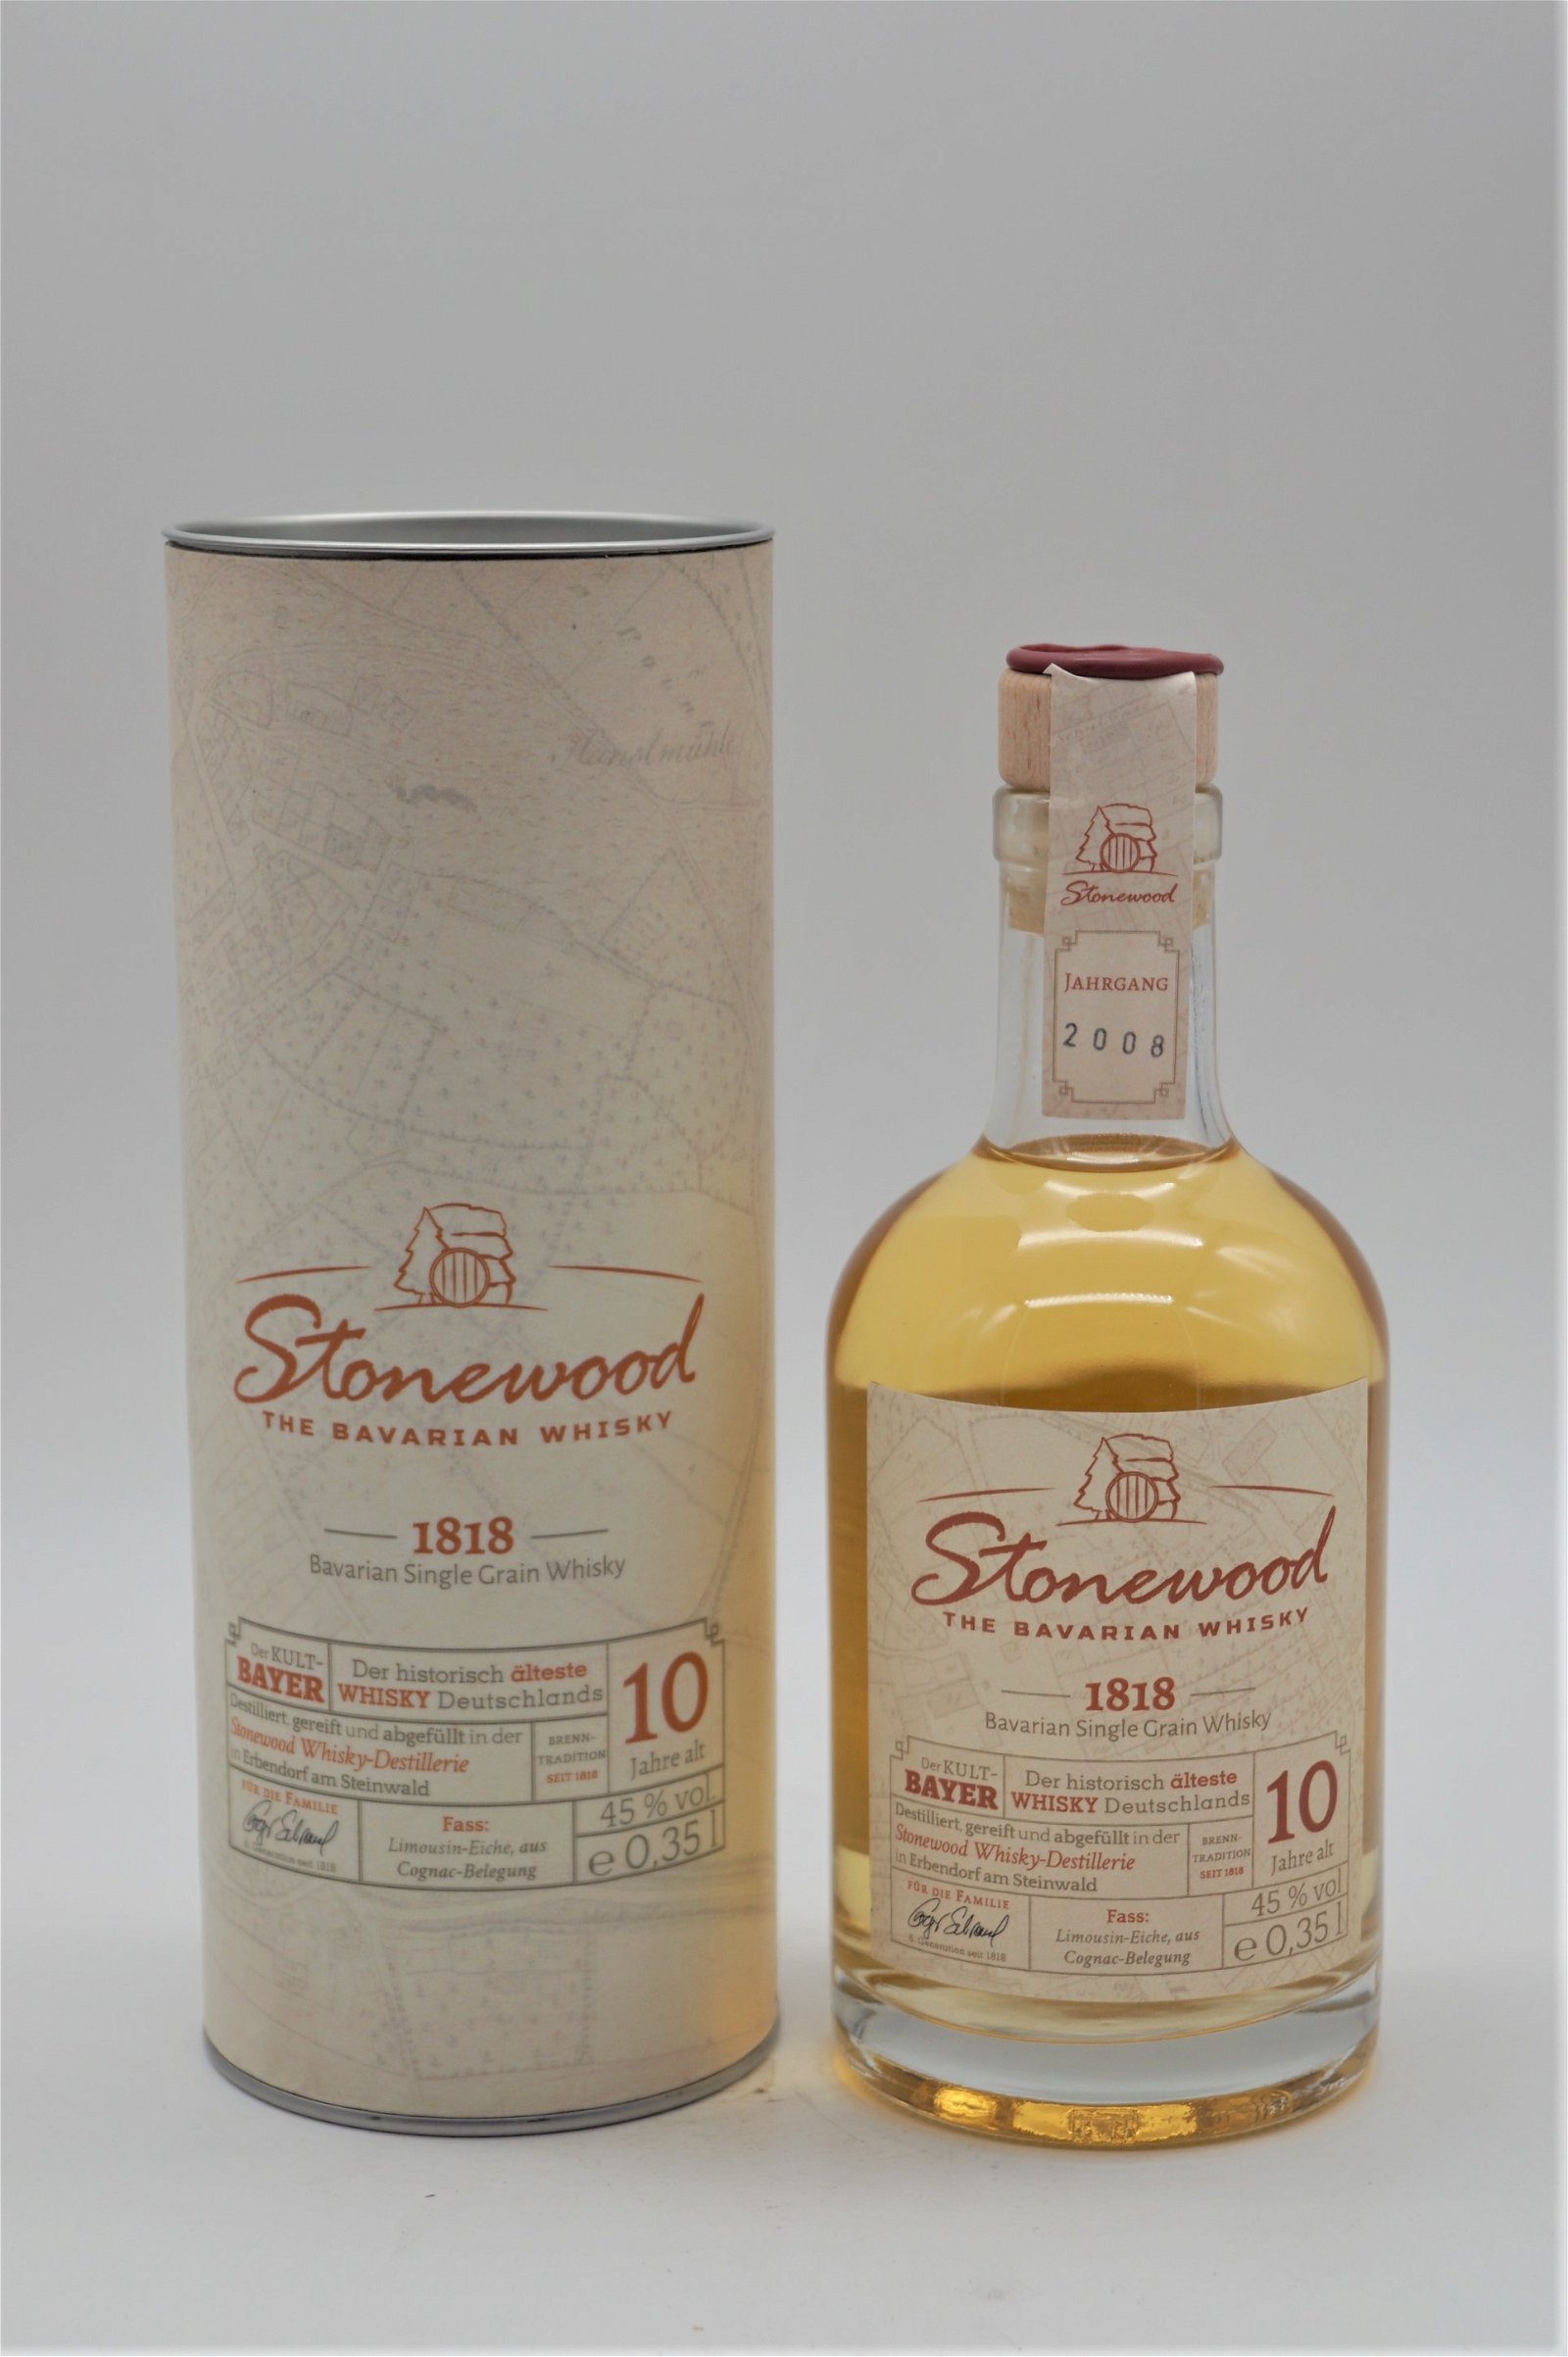 Schraml Stonewood 1818 10 Jahre Bavarian Single Grain Whisky